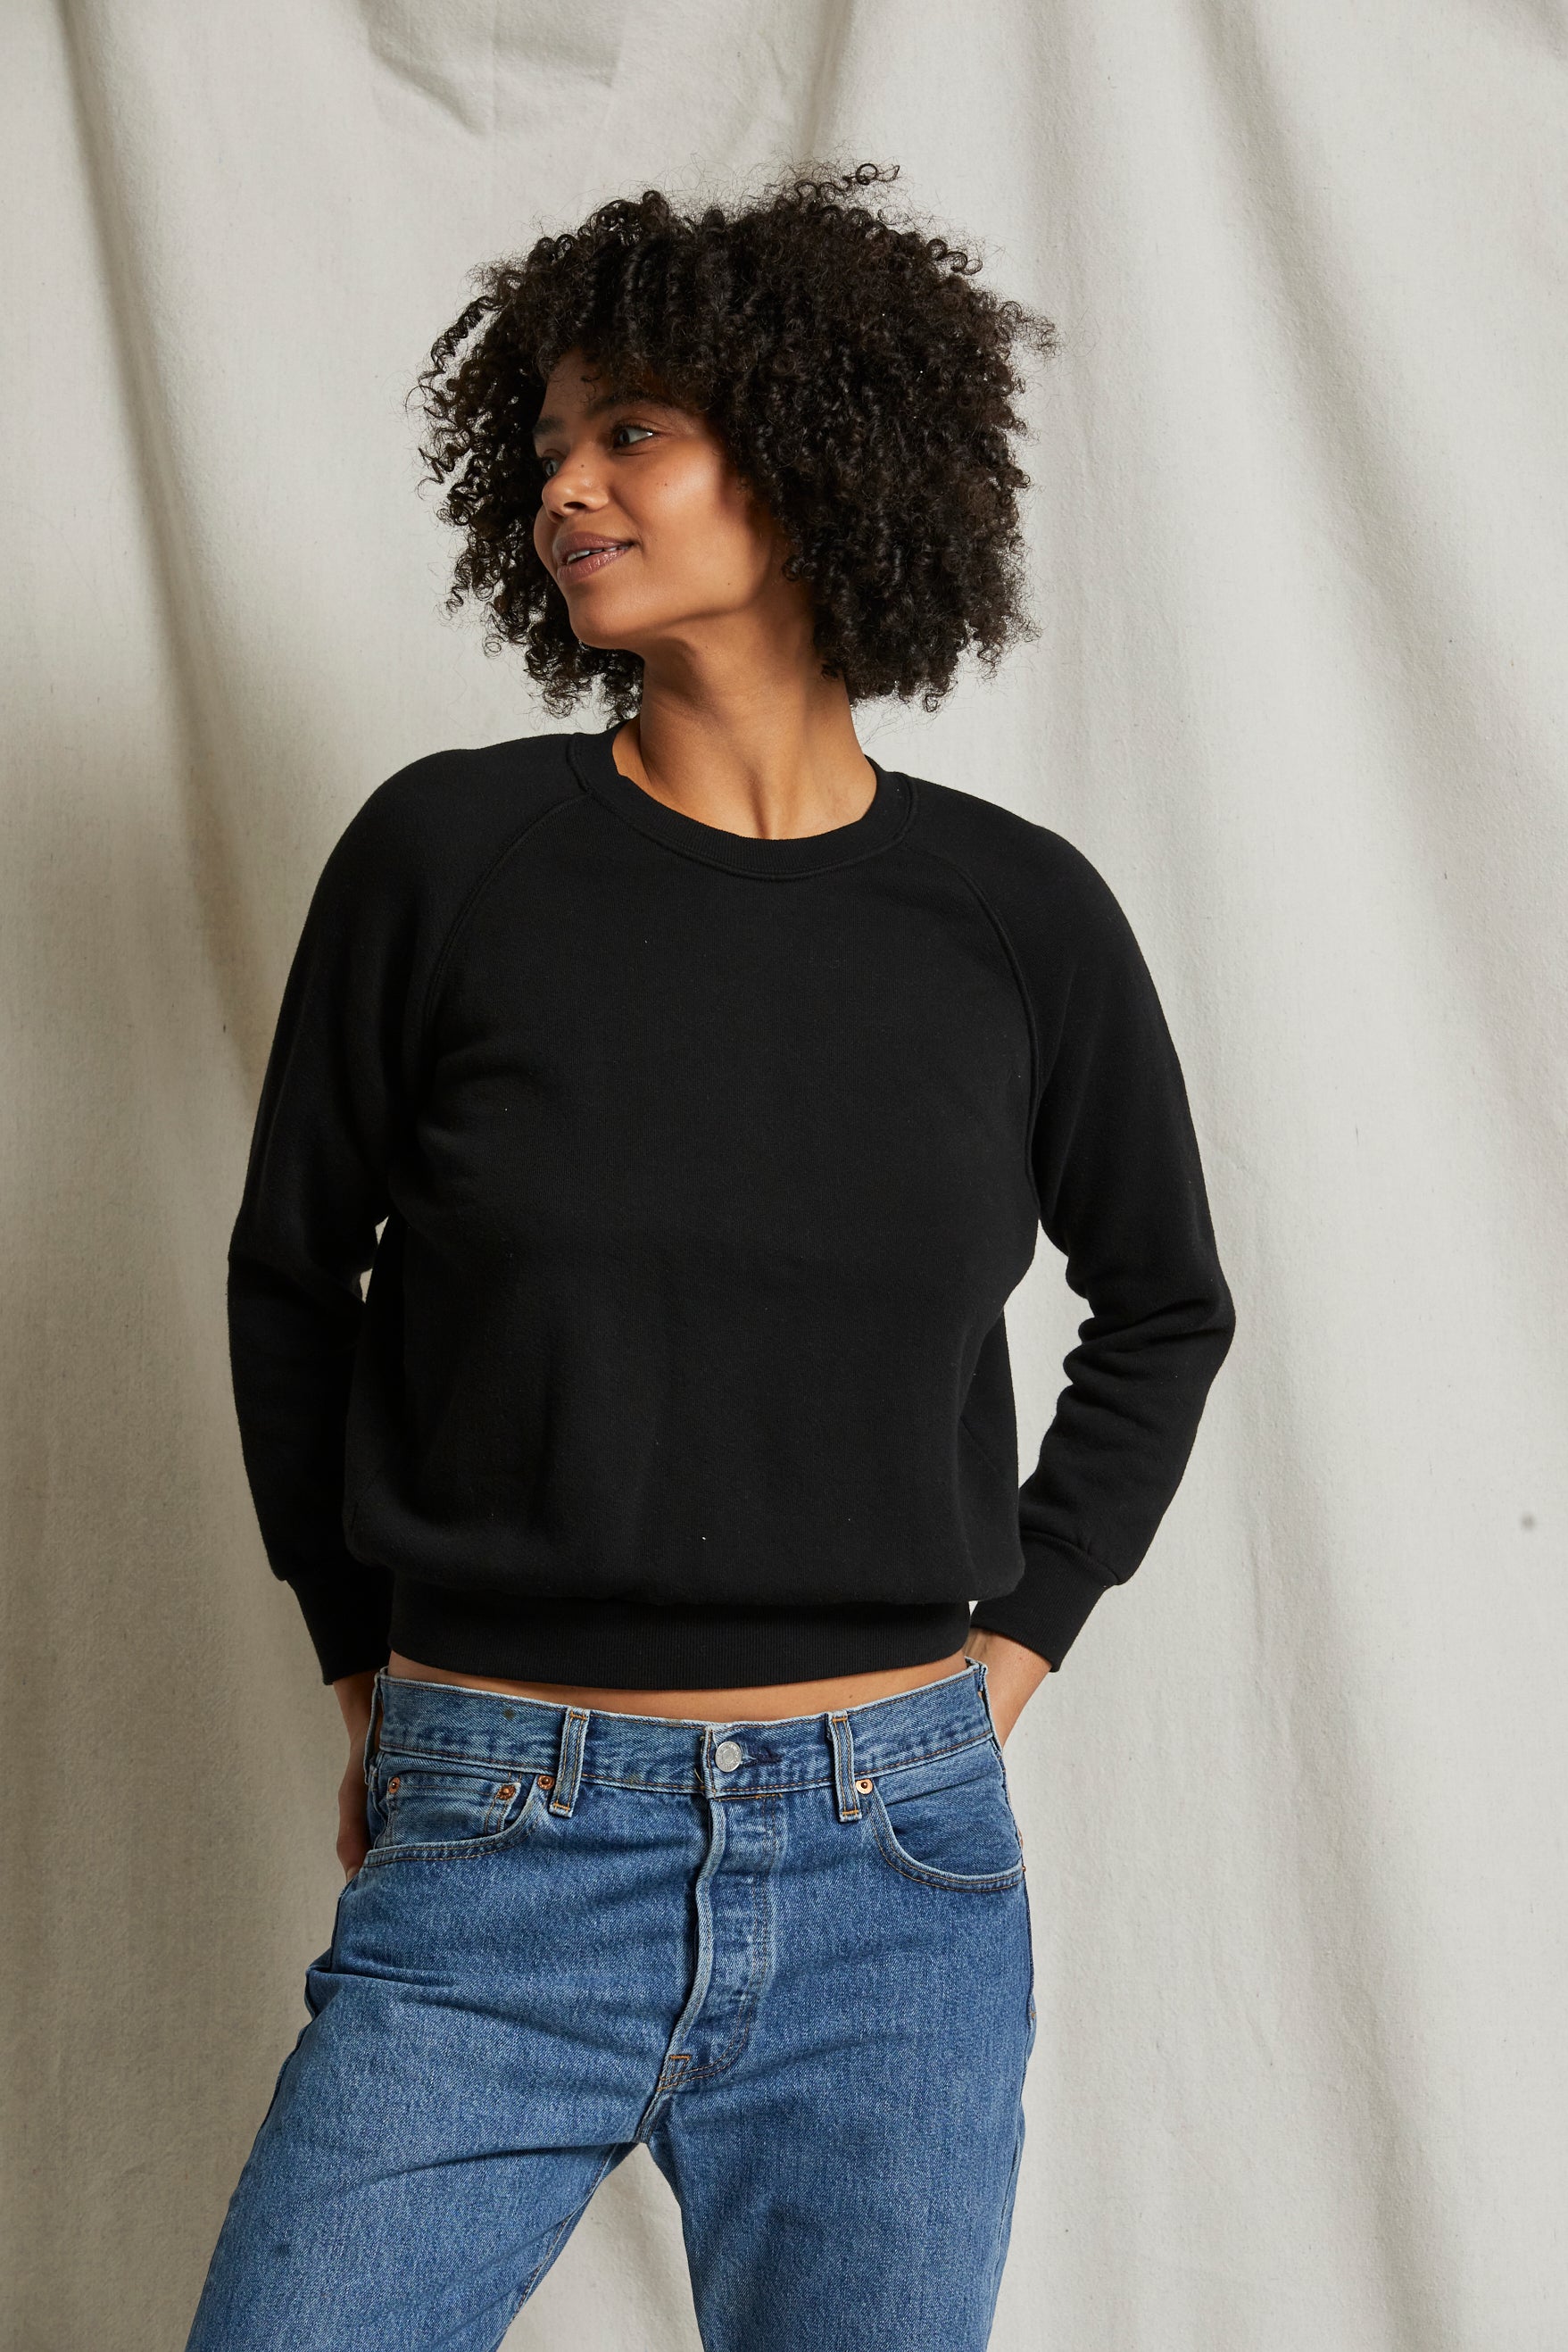 The Lennon | women's fleece sweatshirt | perfectwhitetee